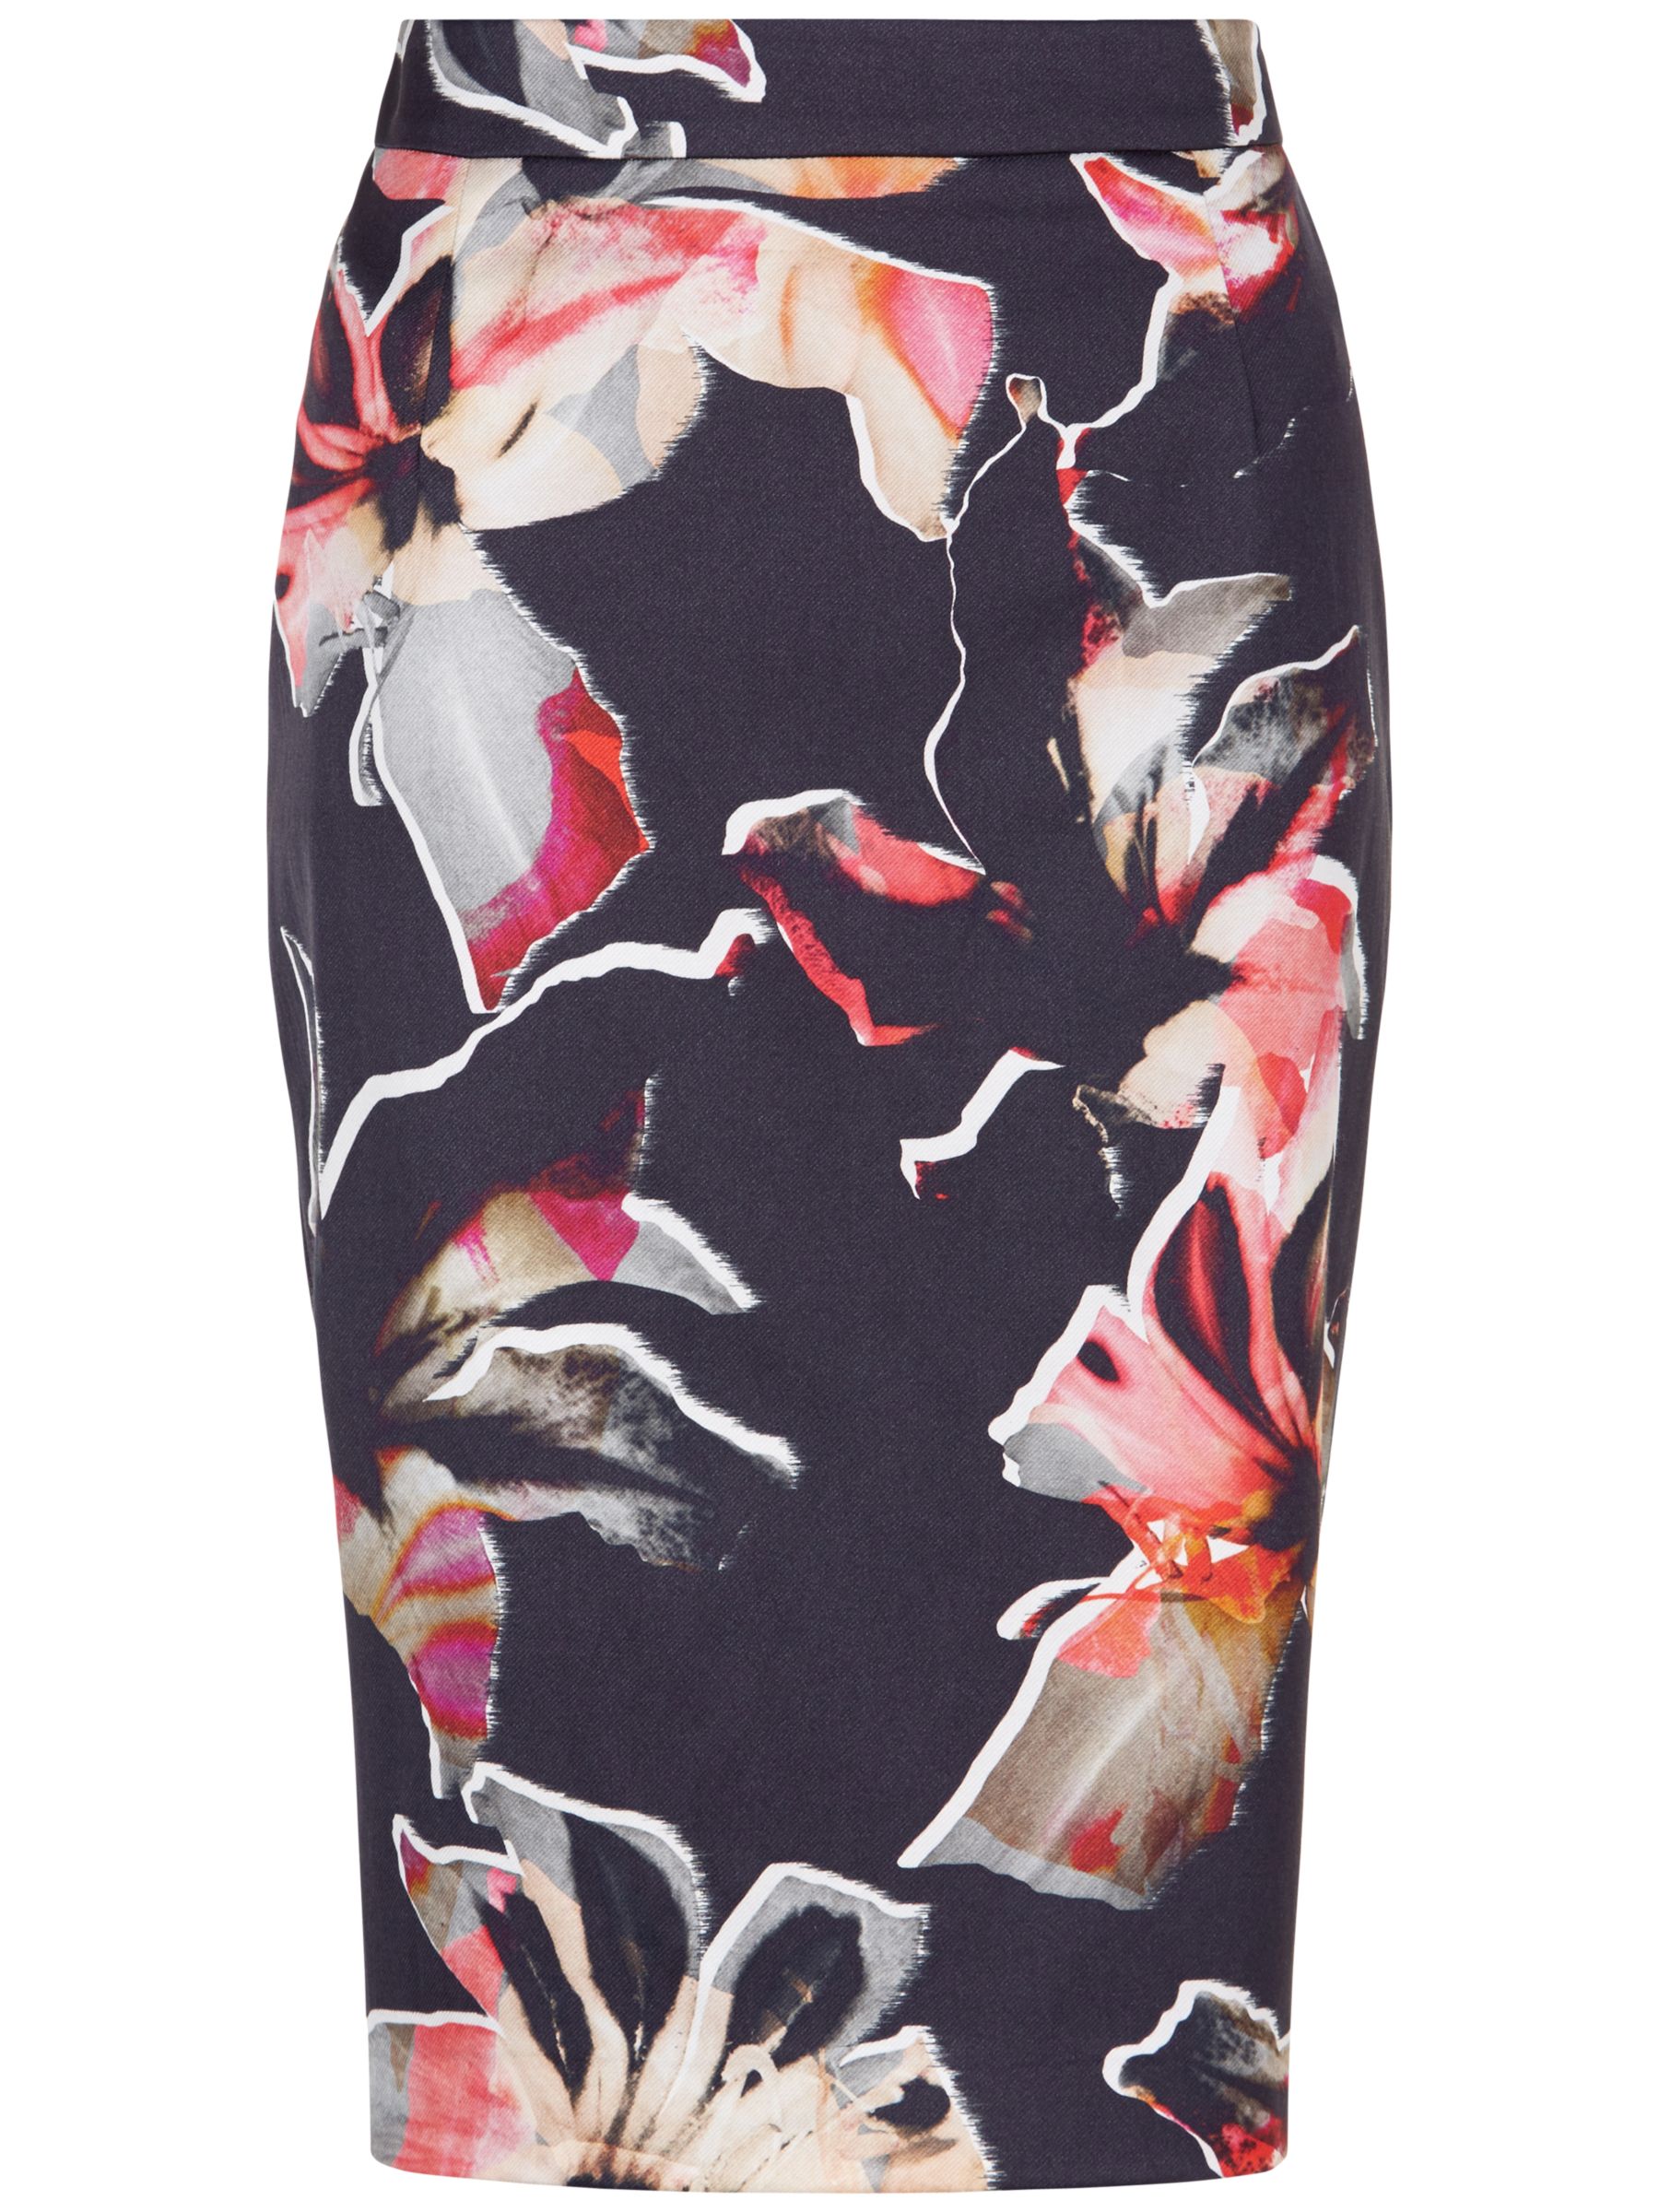 Fenn Wright Manson Lily Print Horizon Skirt, Multi